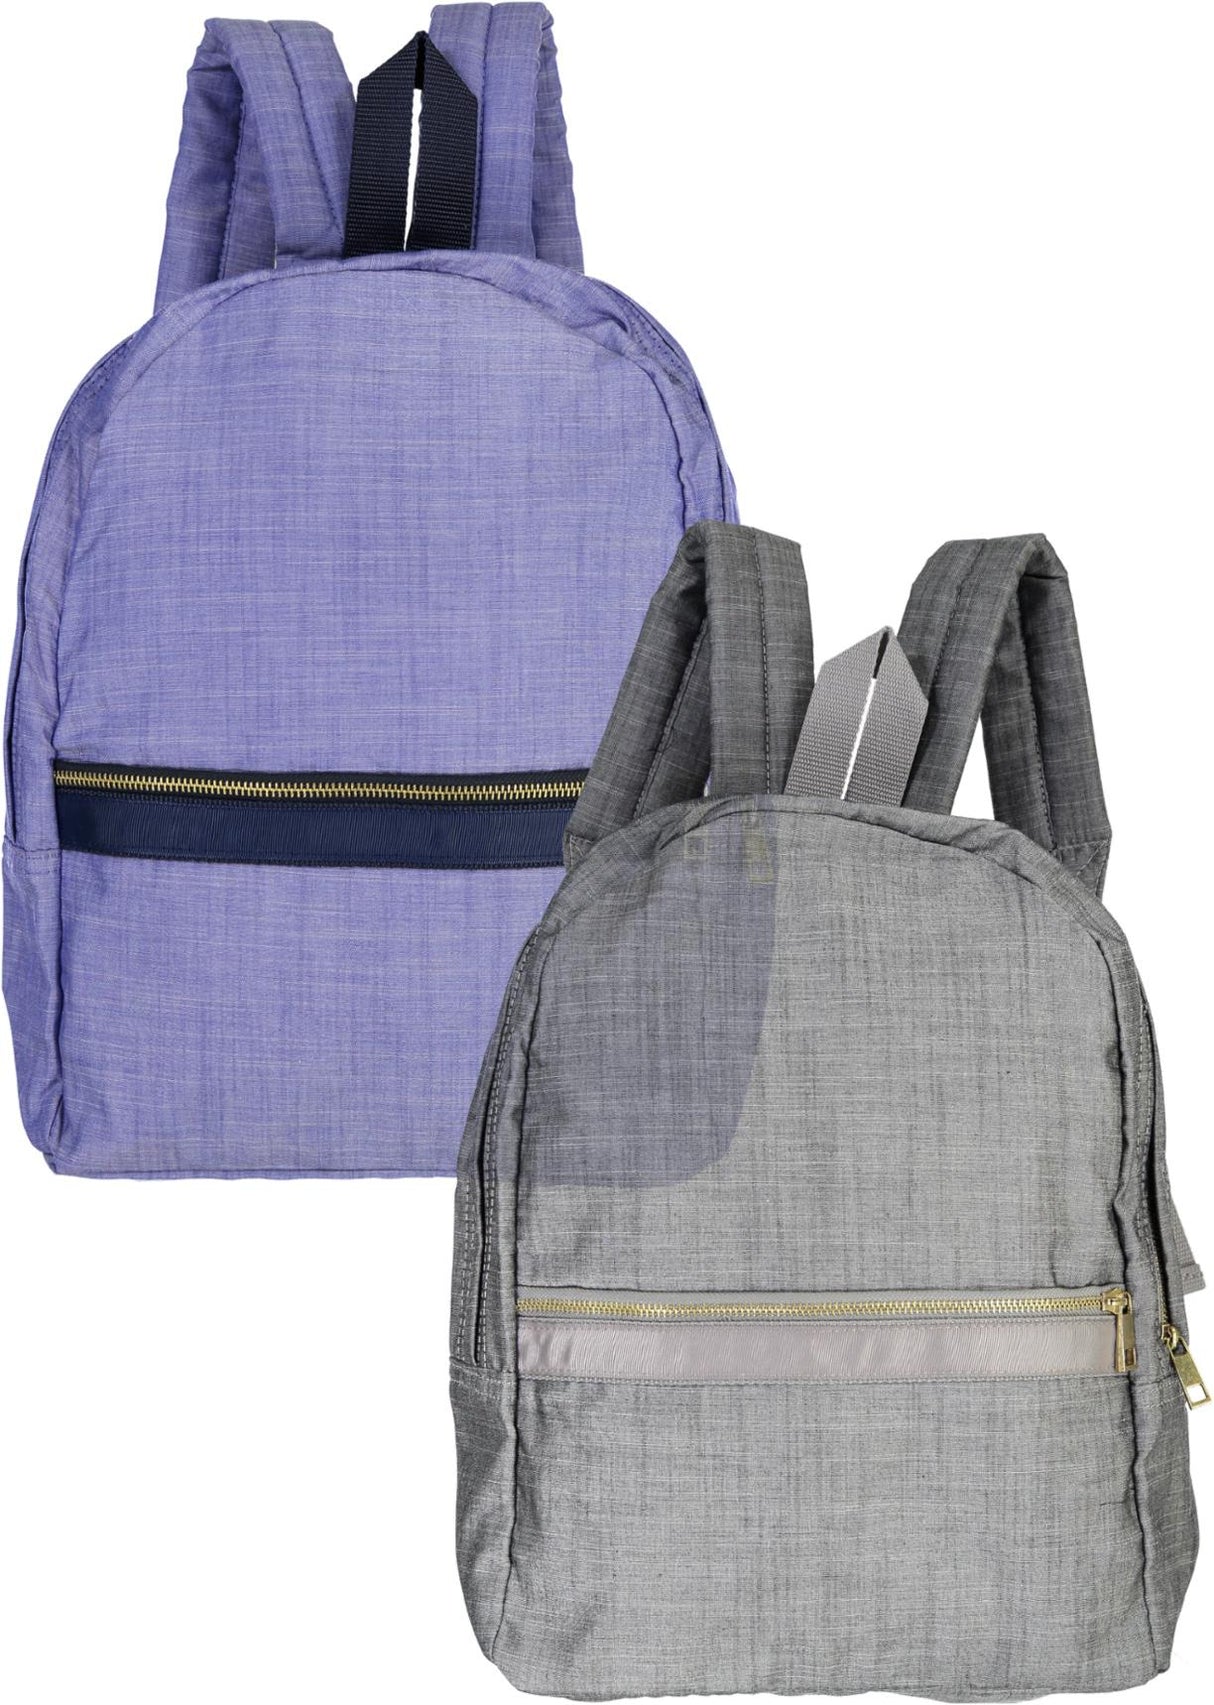 Backpack - Chambray